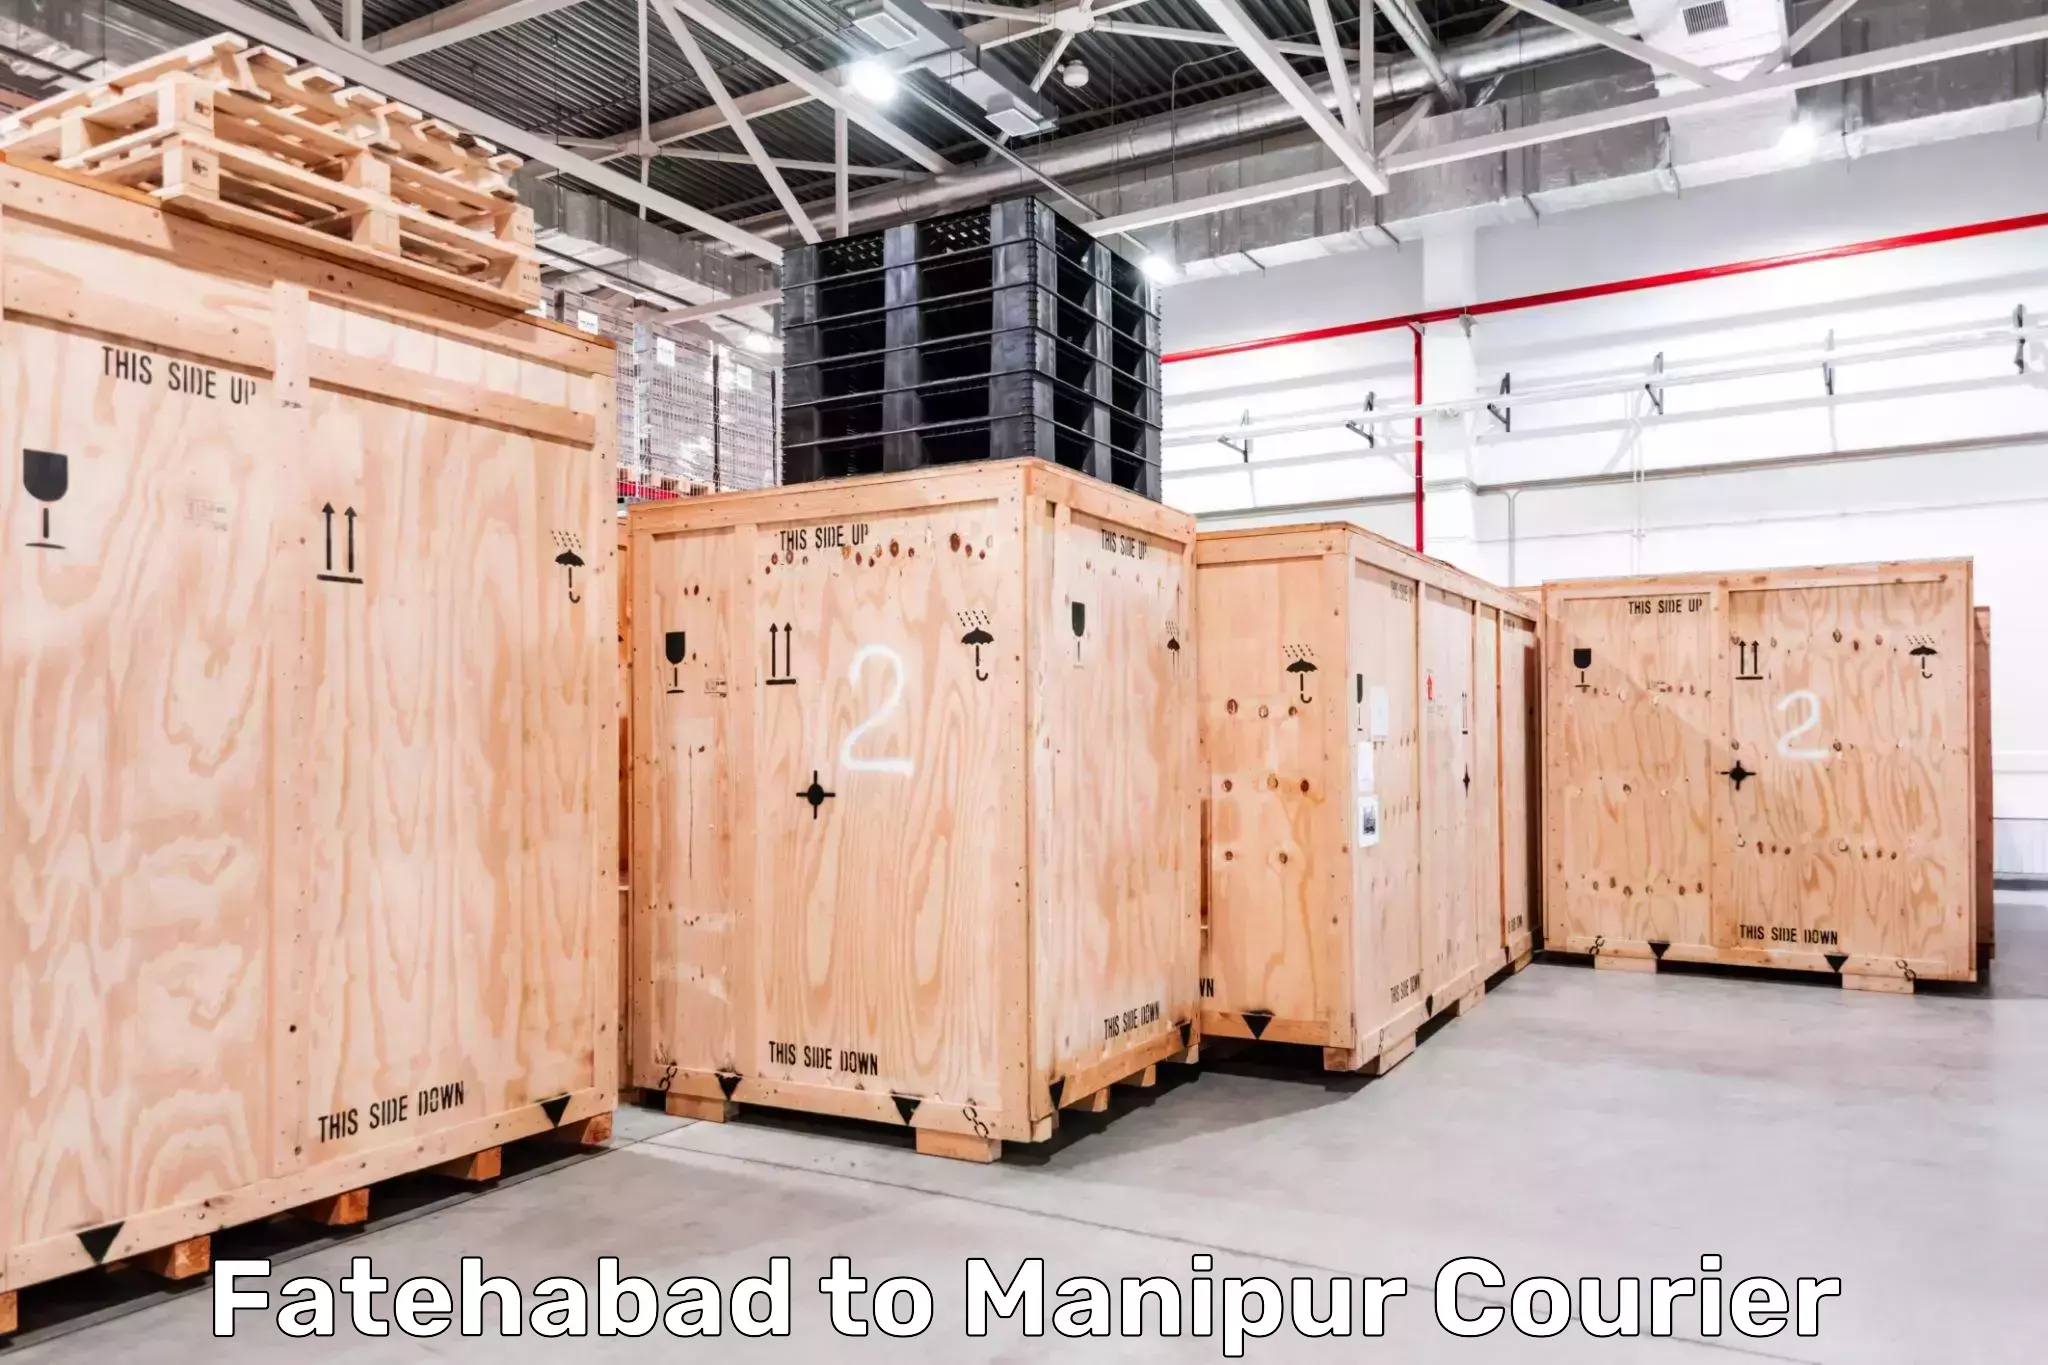 Global logistics network Fatehabad to Manipur